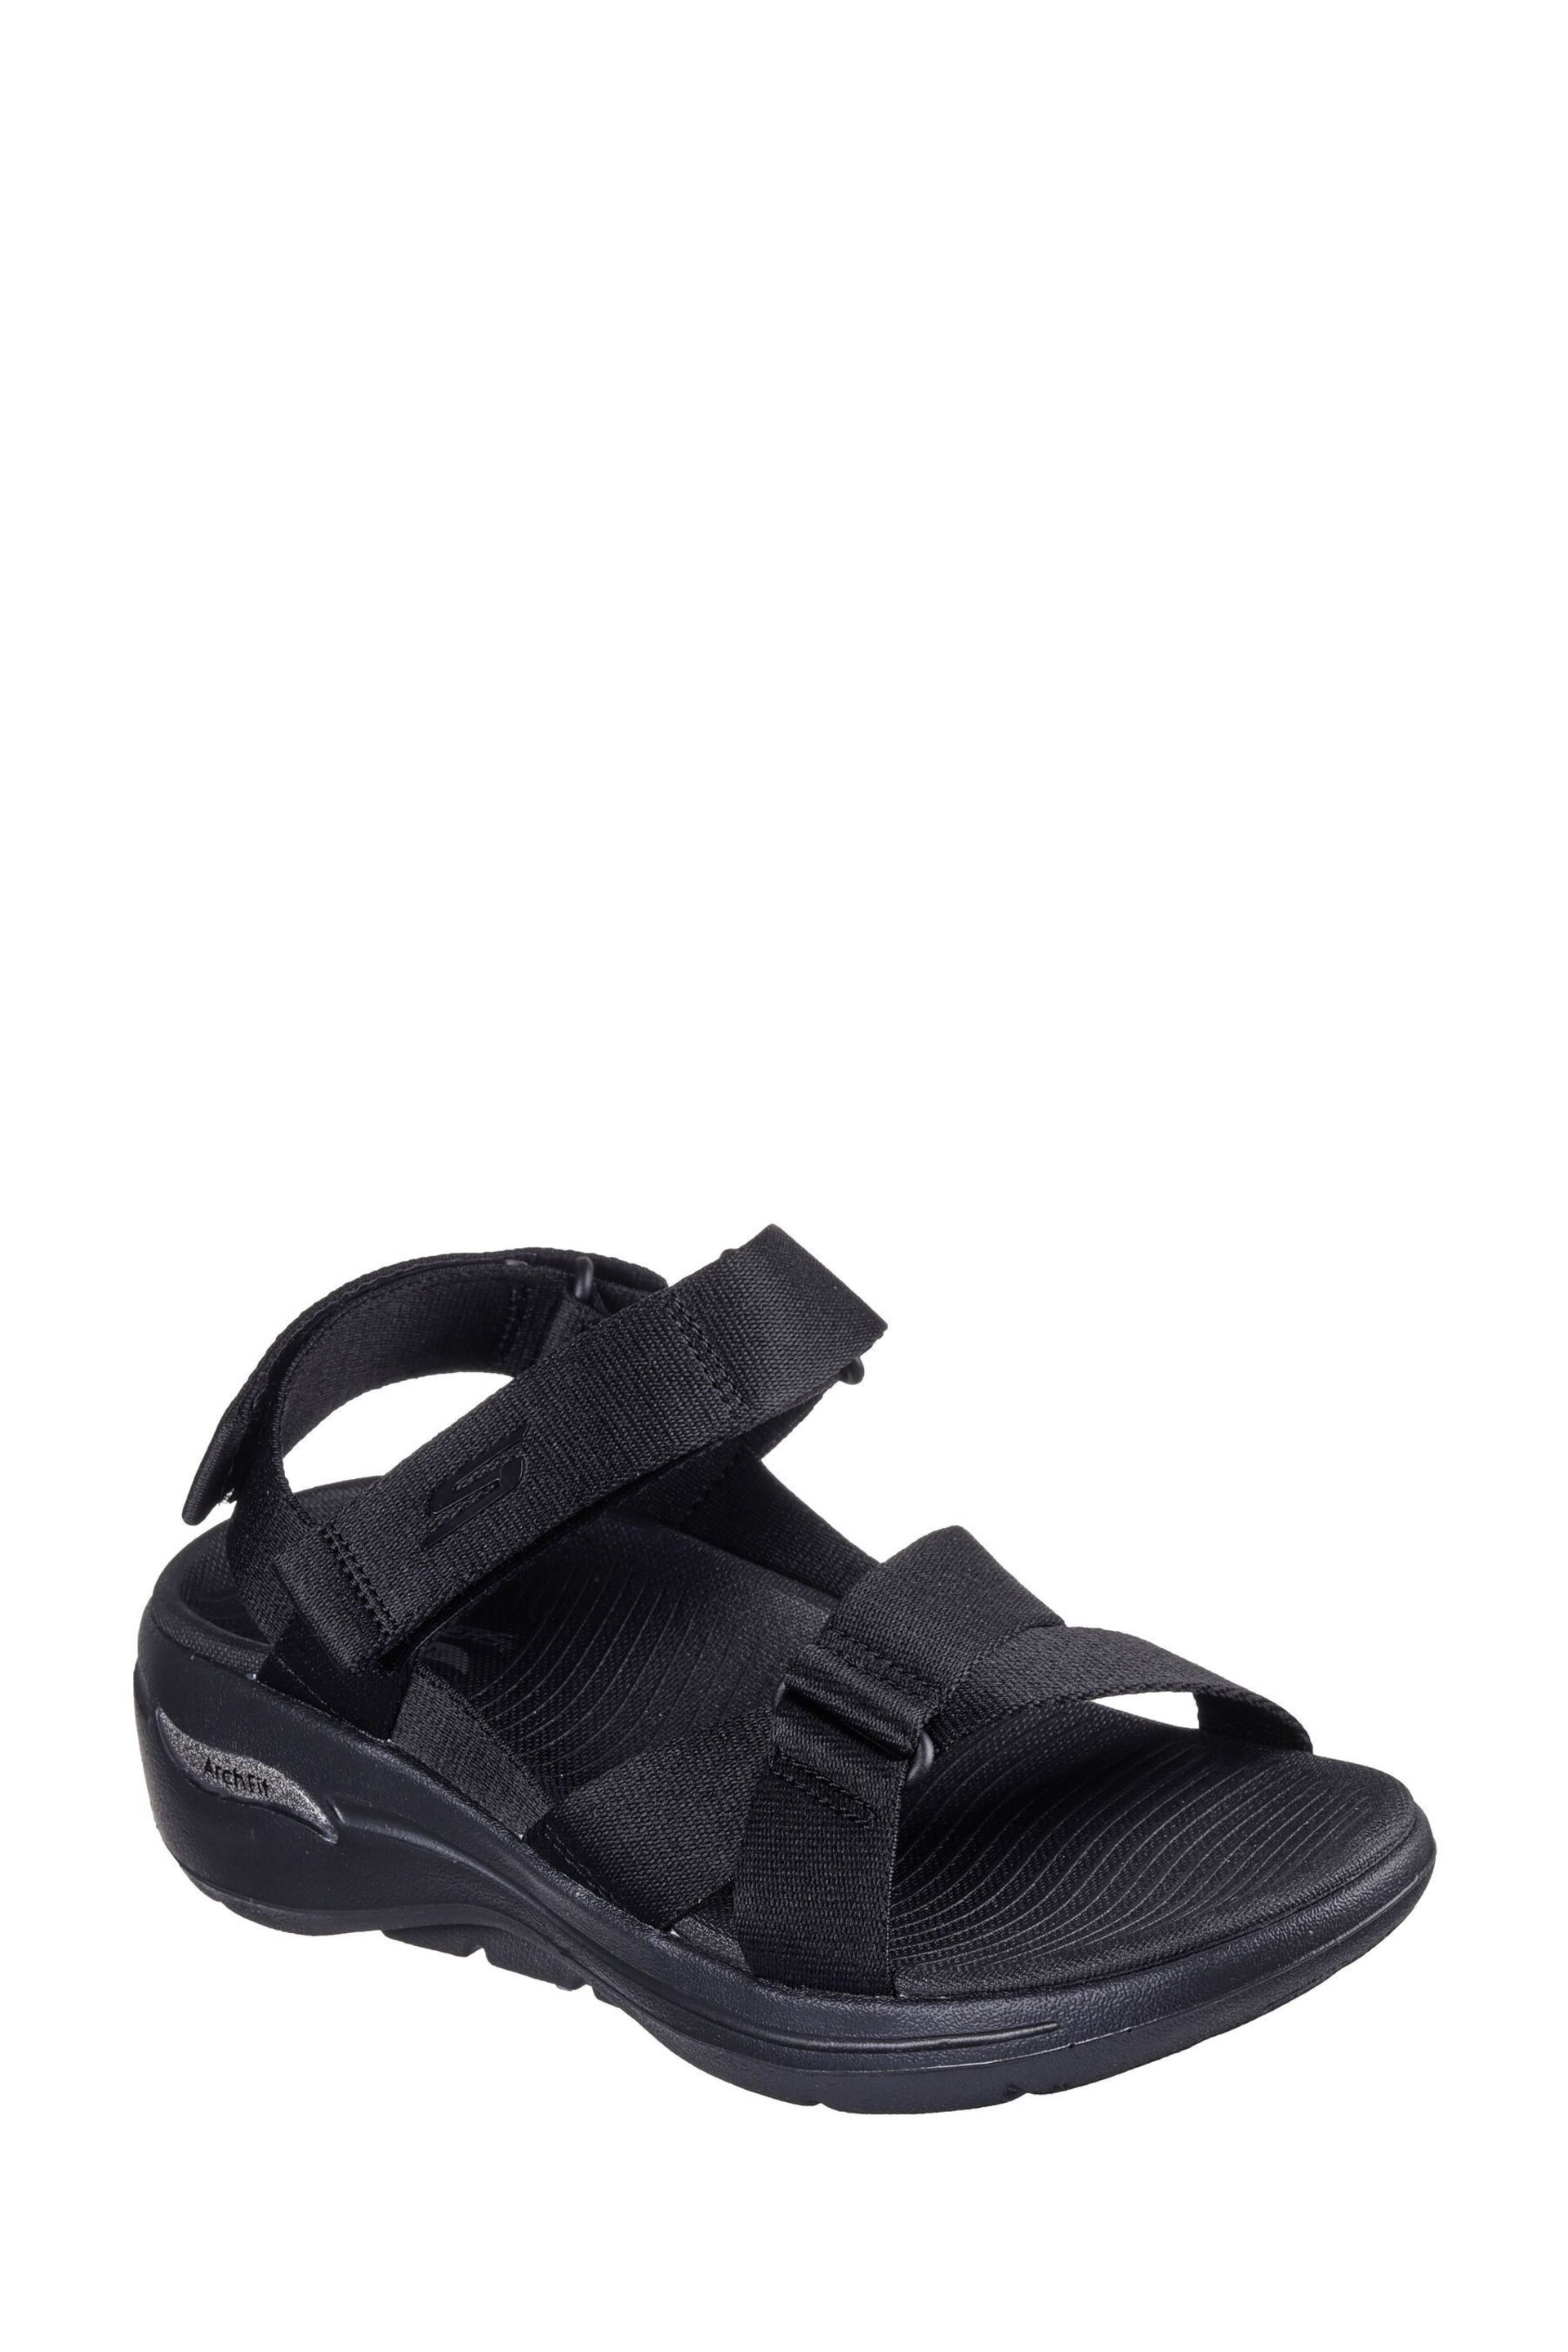 Skechers Black Go Walk Arch Fit Sandals - Image 3 of 5